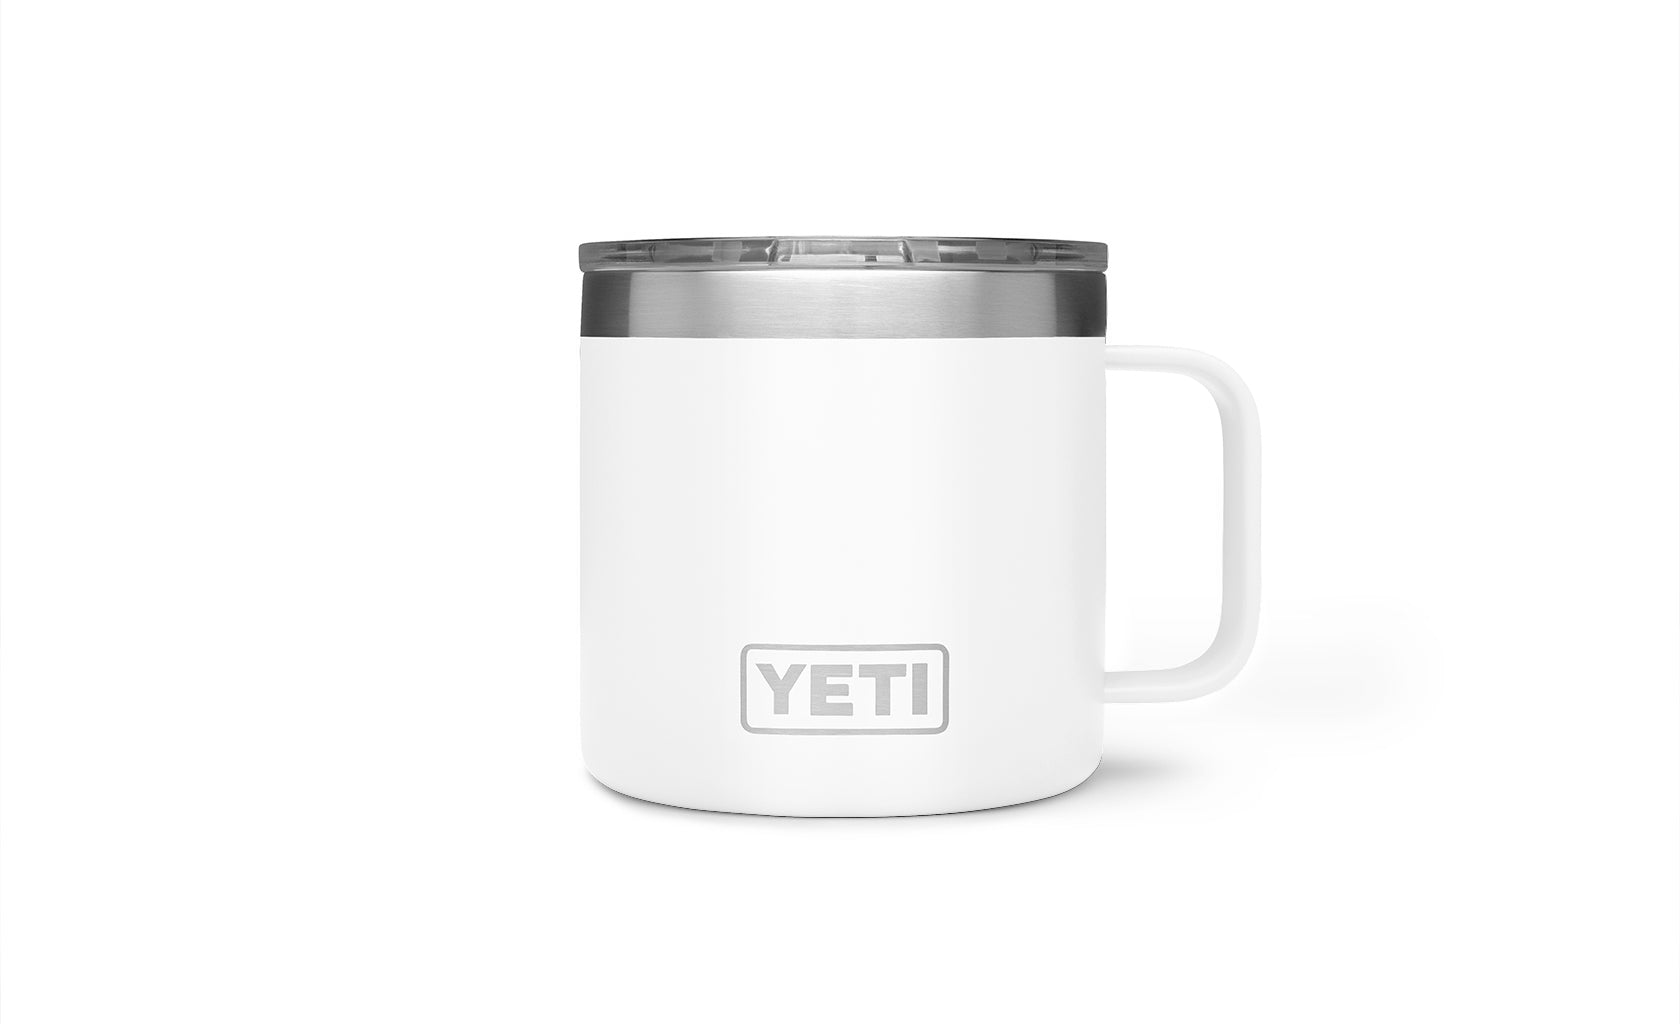 NEW Yeti 14oz coffee mug Harbor Pink limited edition rambler cup